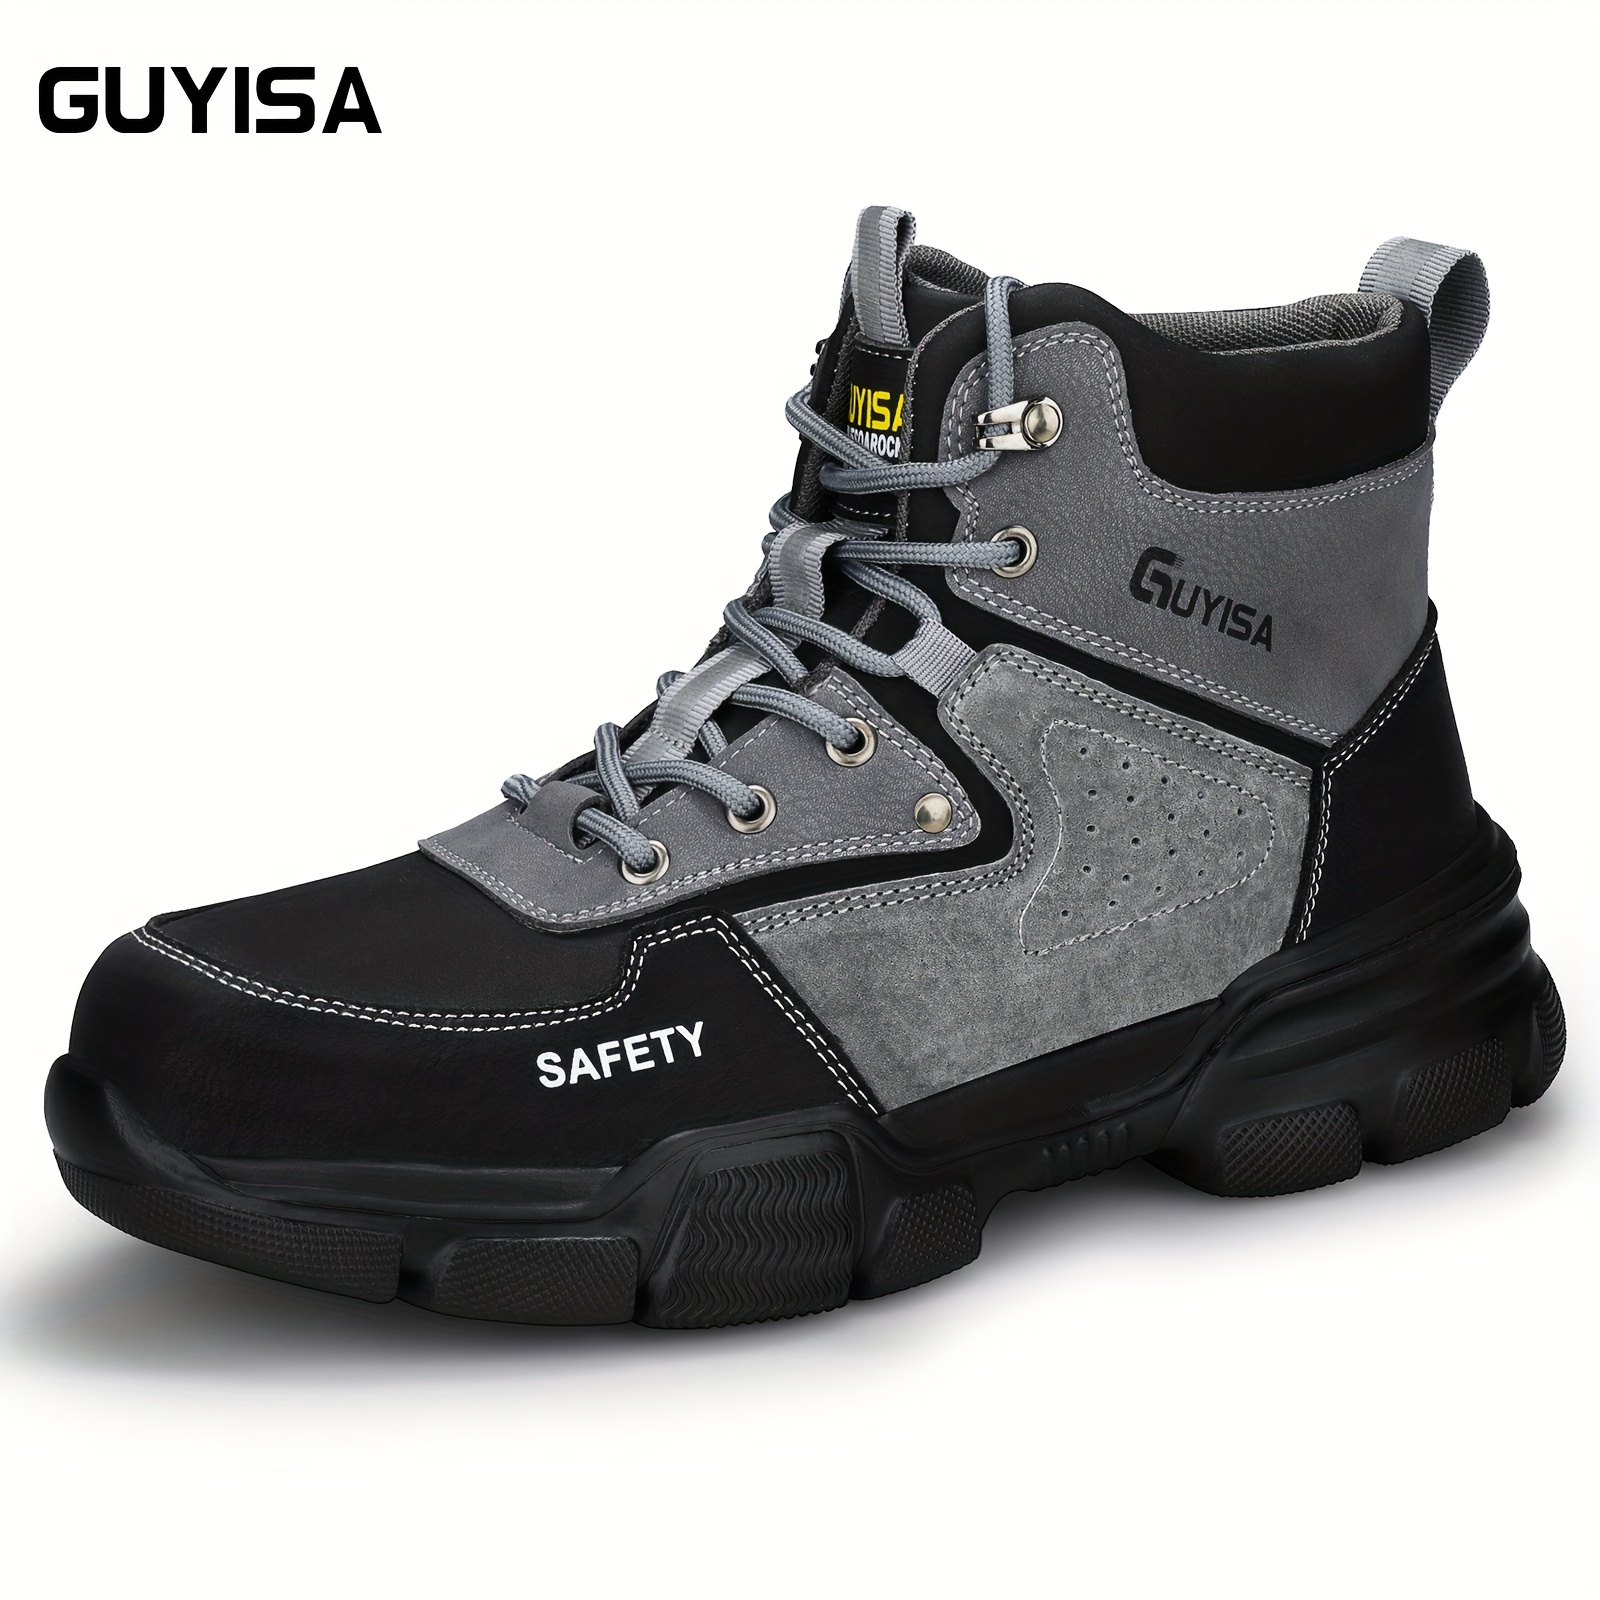 Guyisa 10kv Work High Quality Stylish Safety Shoes Men Steel Toe